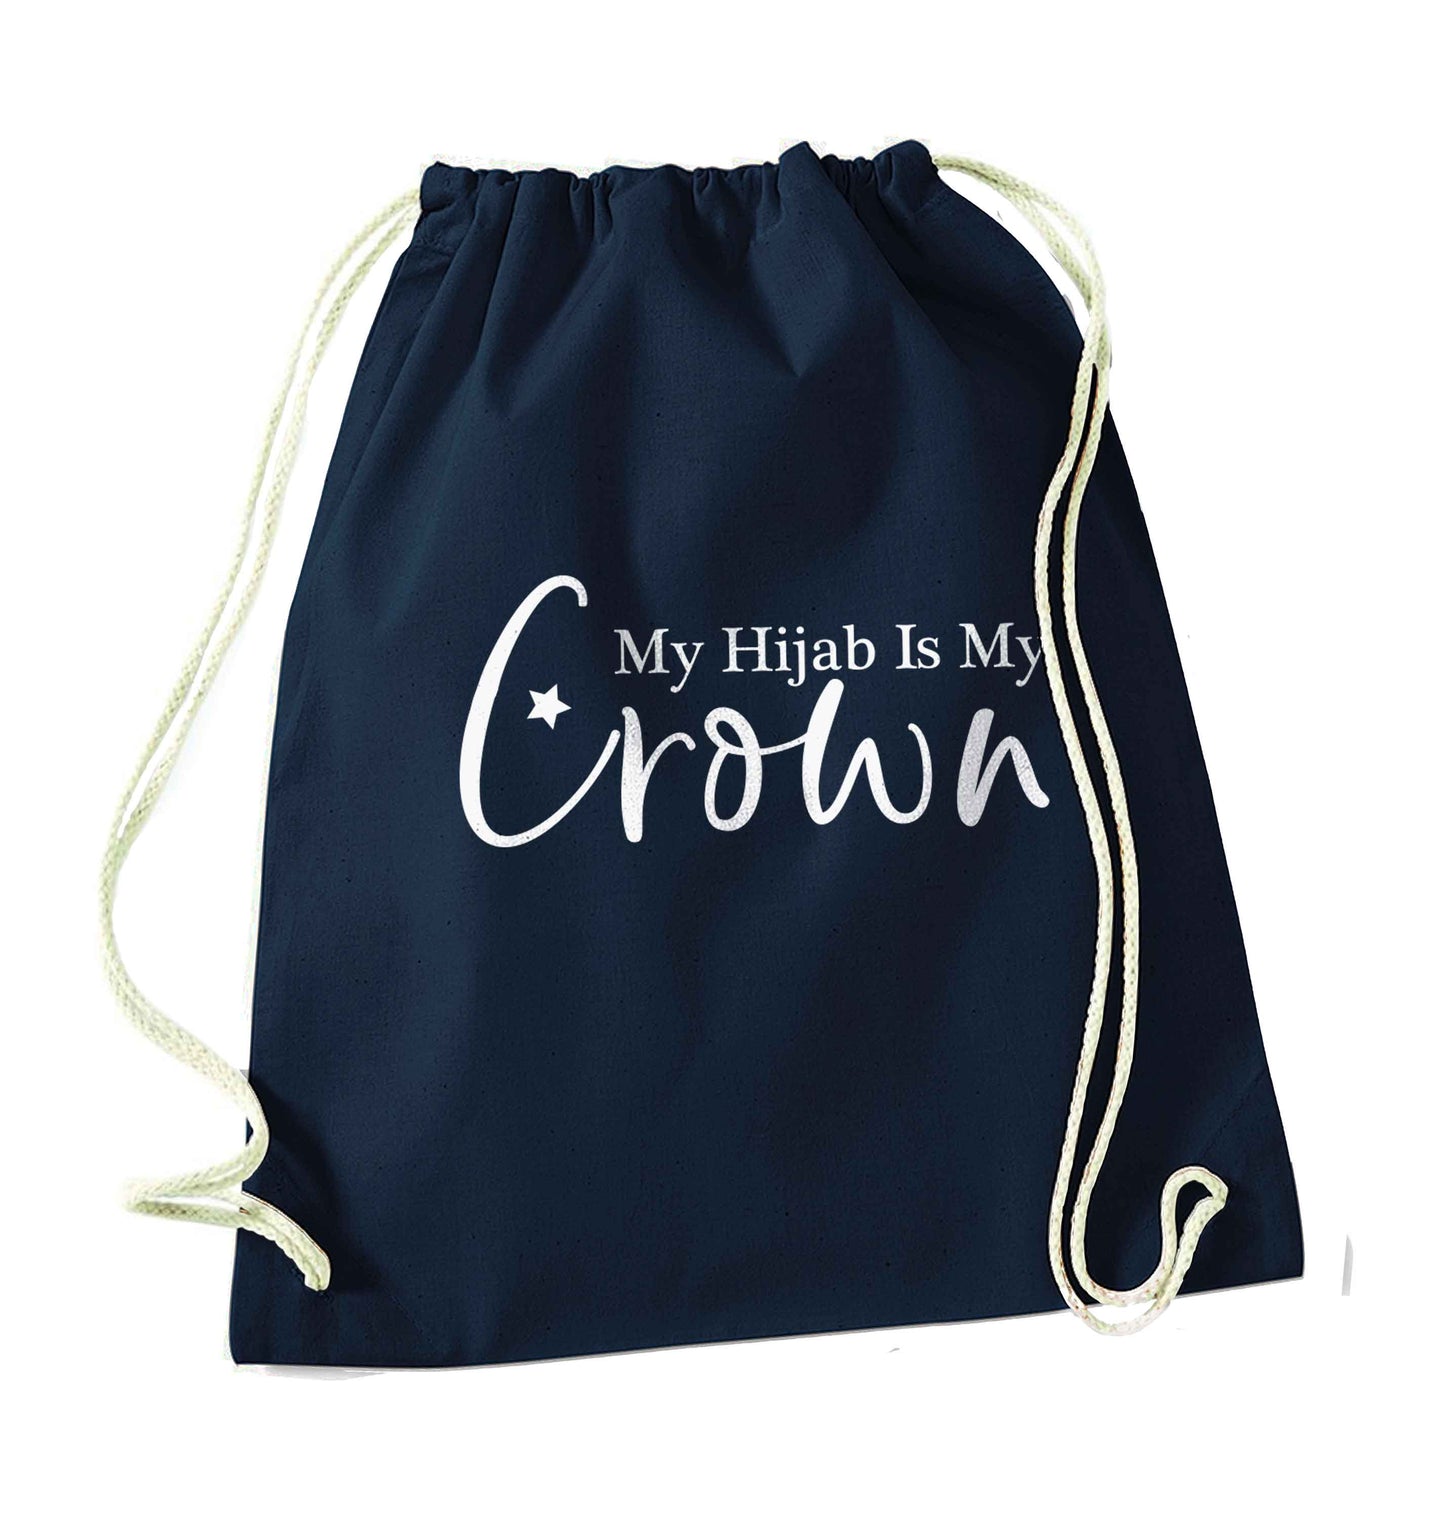 My hijab is my crown navy drawstring bag